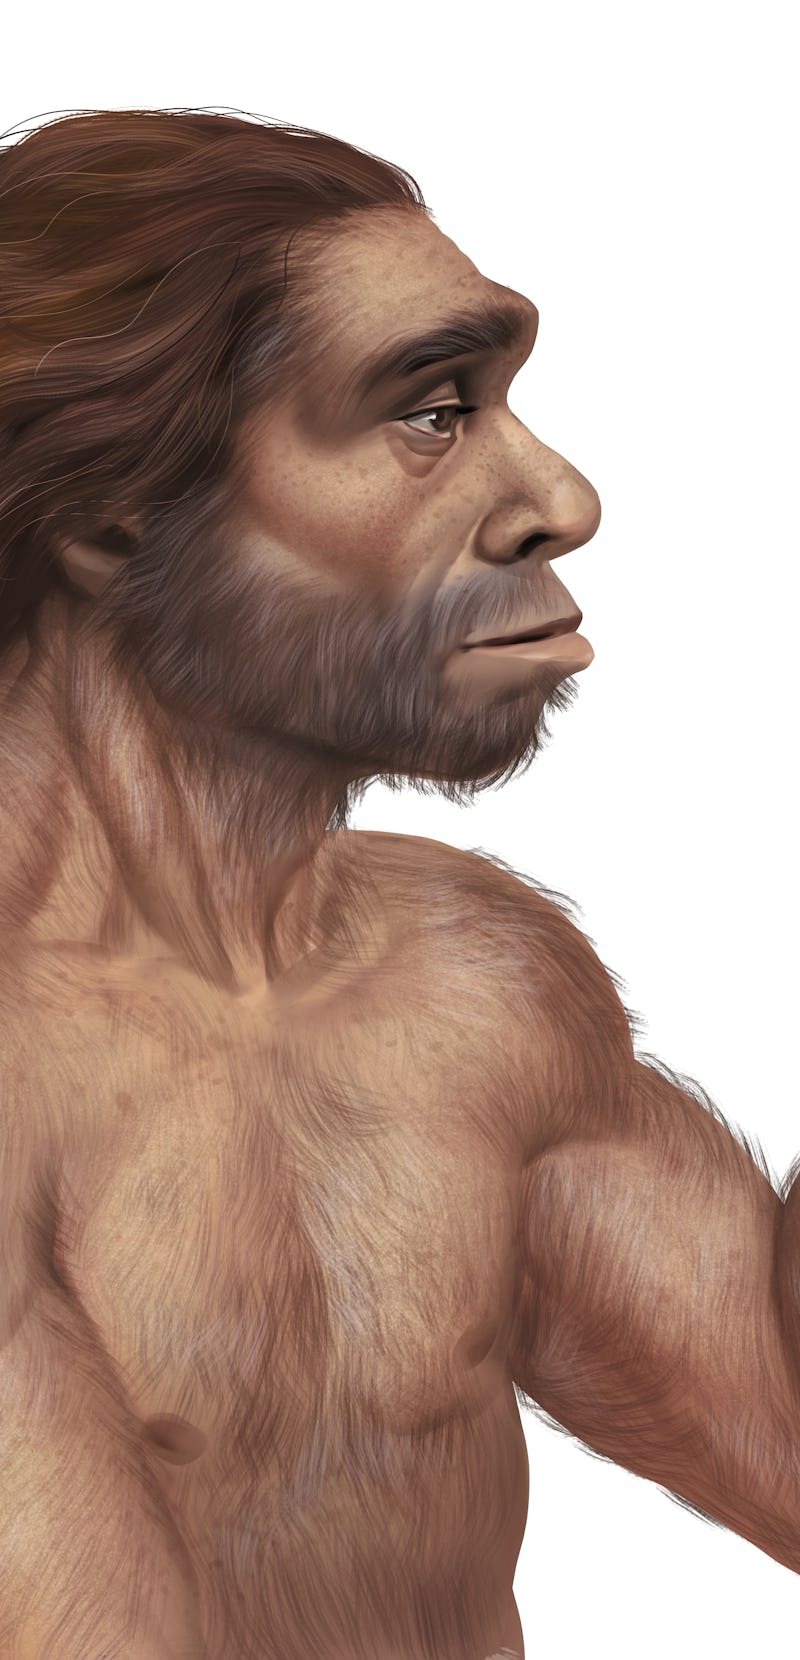 Full Color Realistic Illustration of Prehistoric Neanderthal Man Holding a Neanderthal Skull